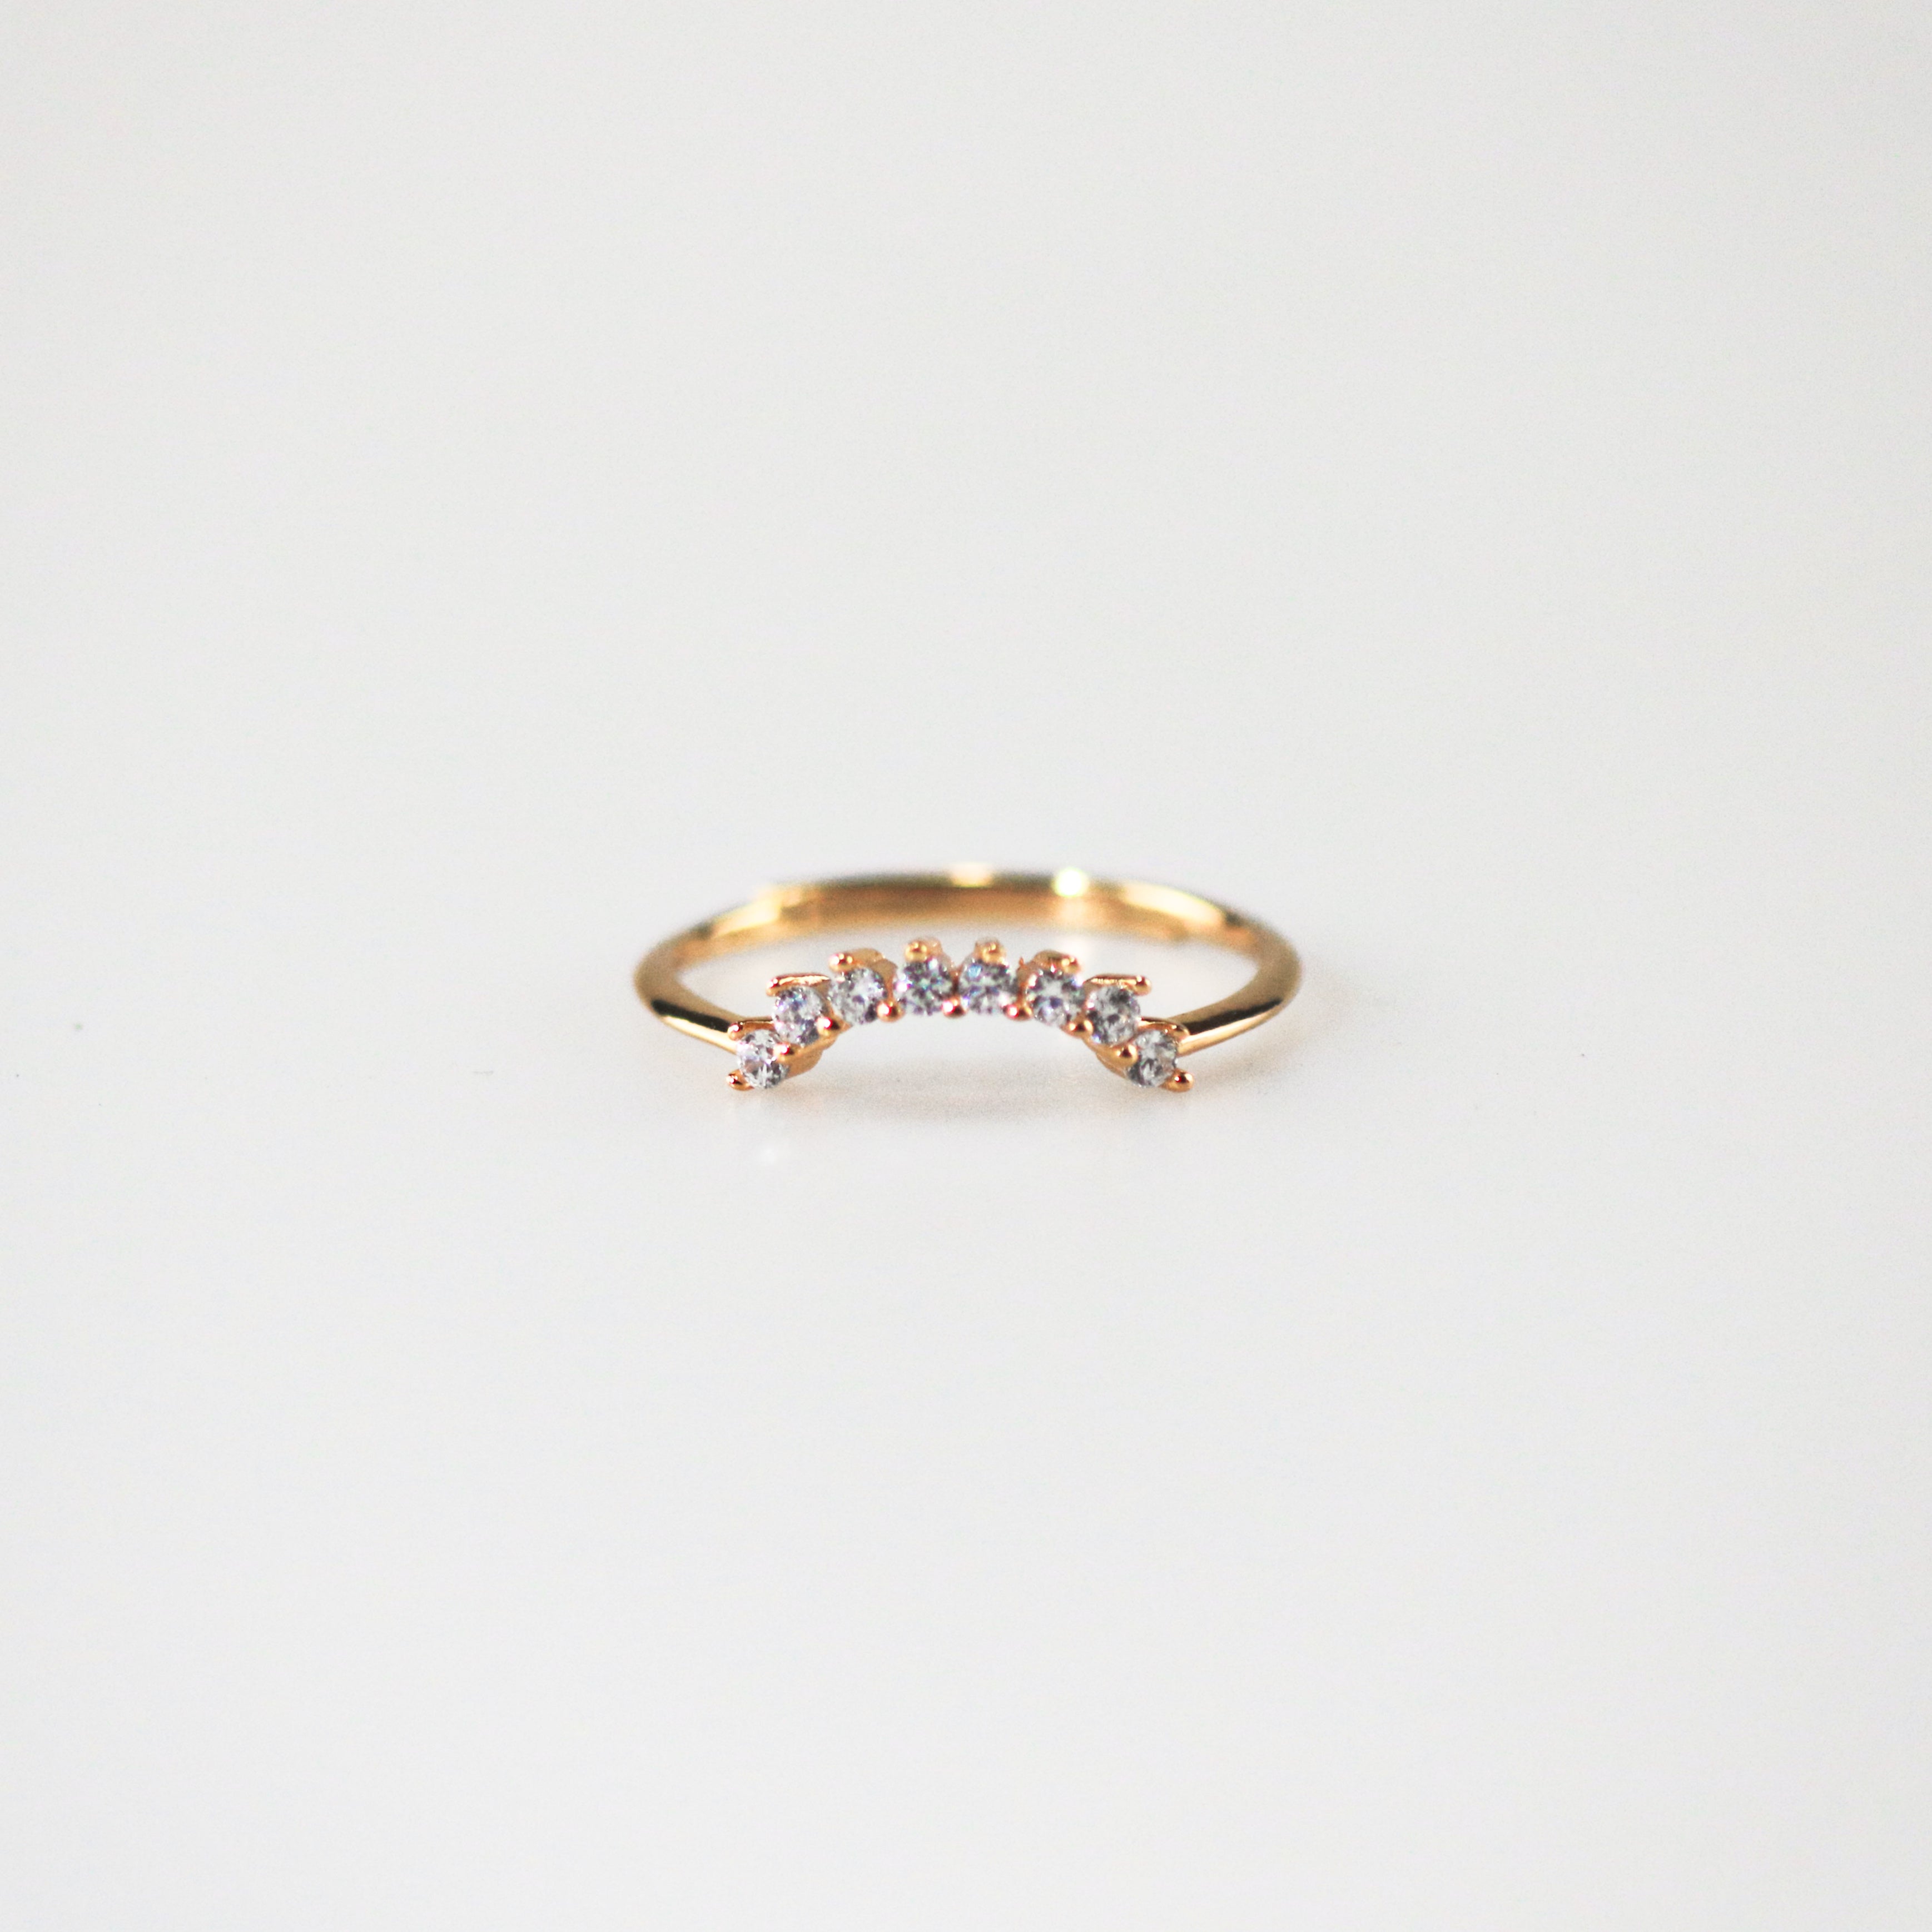 Meideya Jewelry Arch Band Ring Gold vermeil